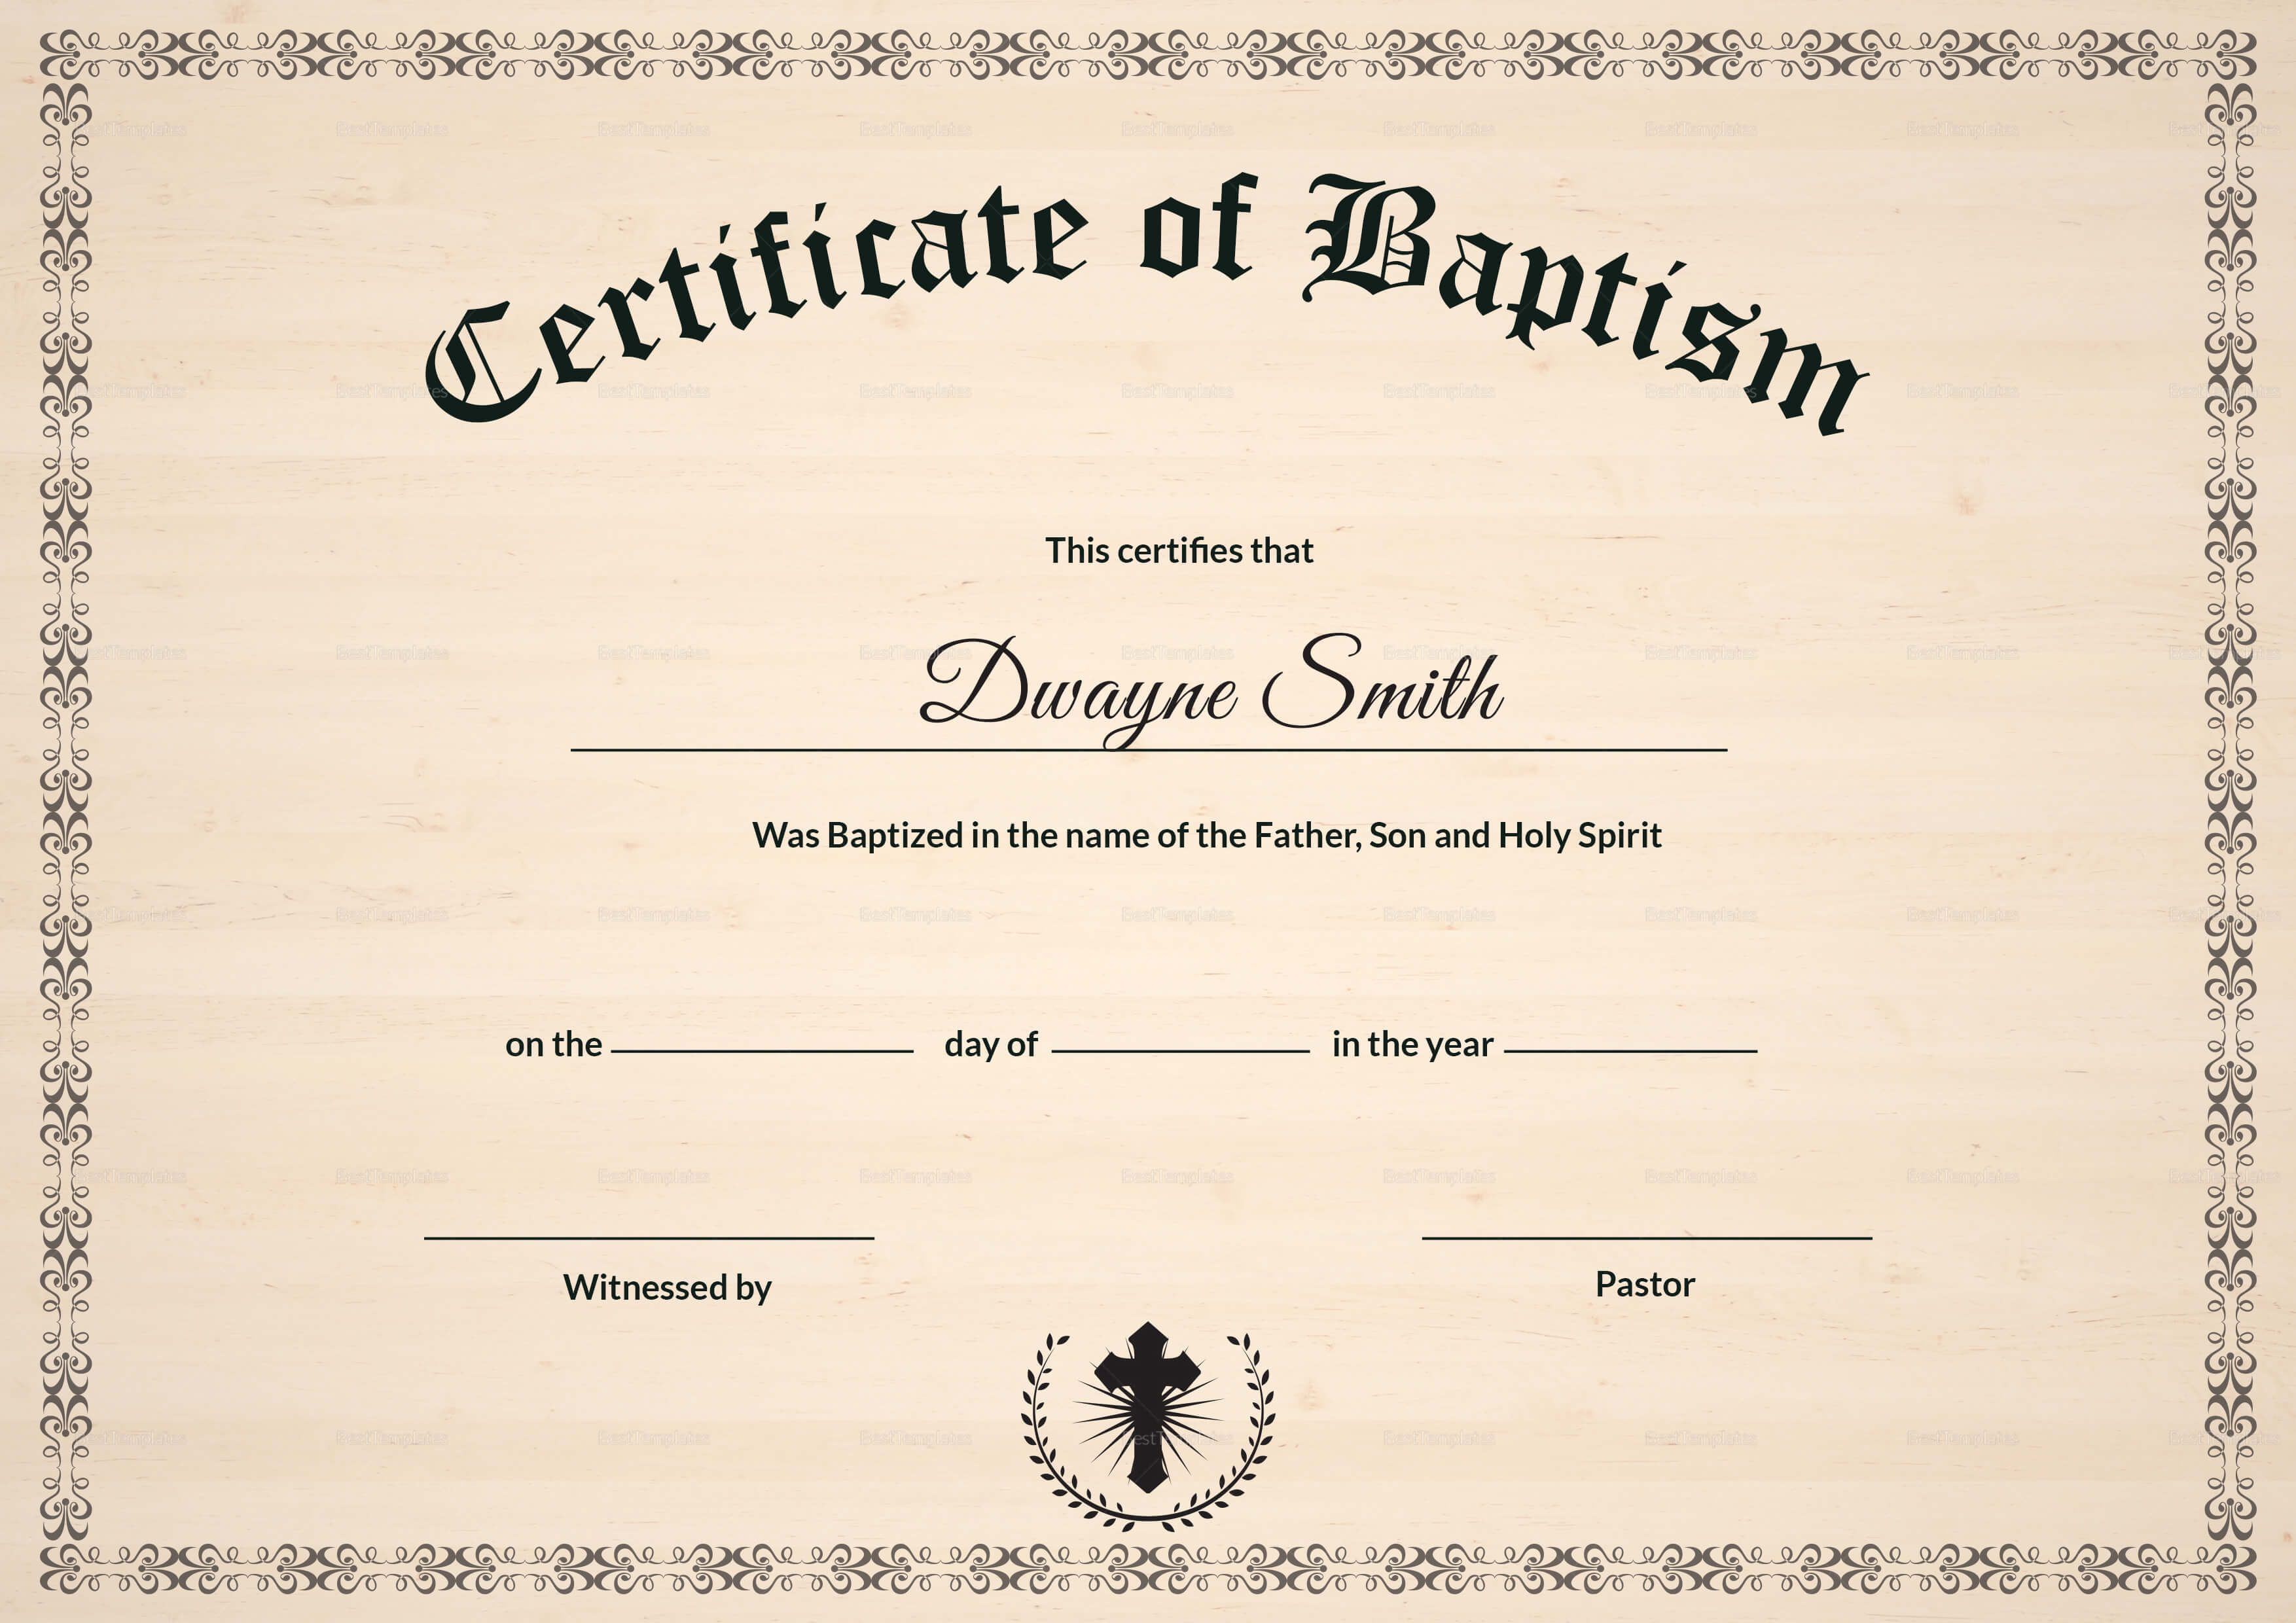 Baptism Certificate Design Template In Psd, Word Throughout Baptism Certificate Template Word